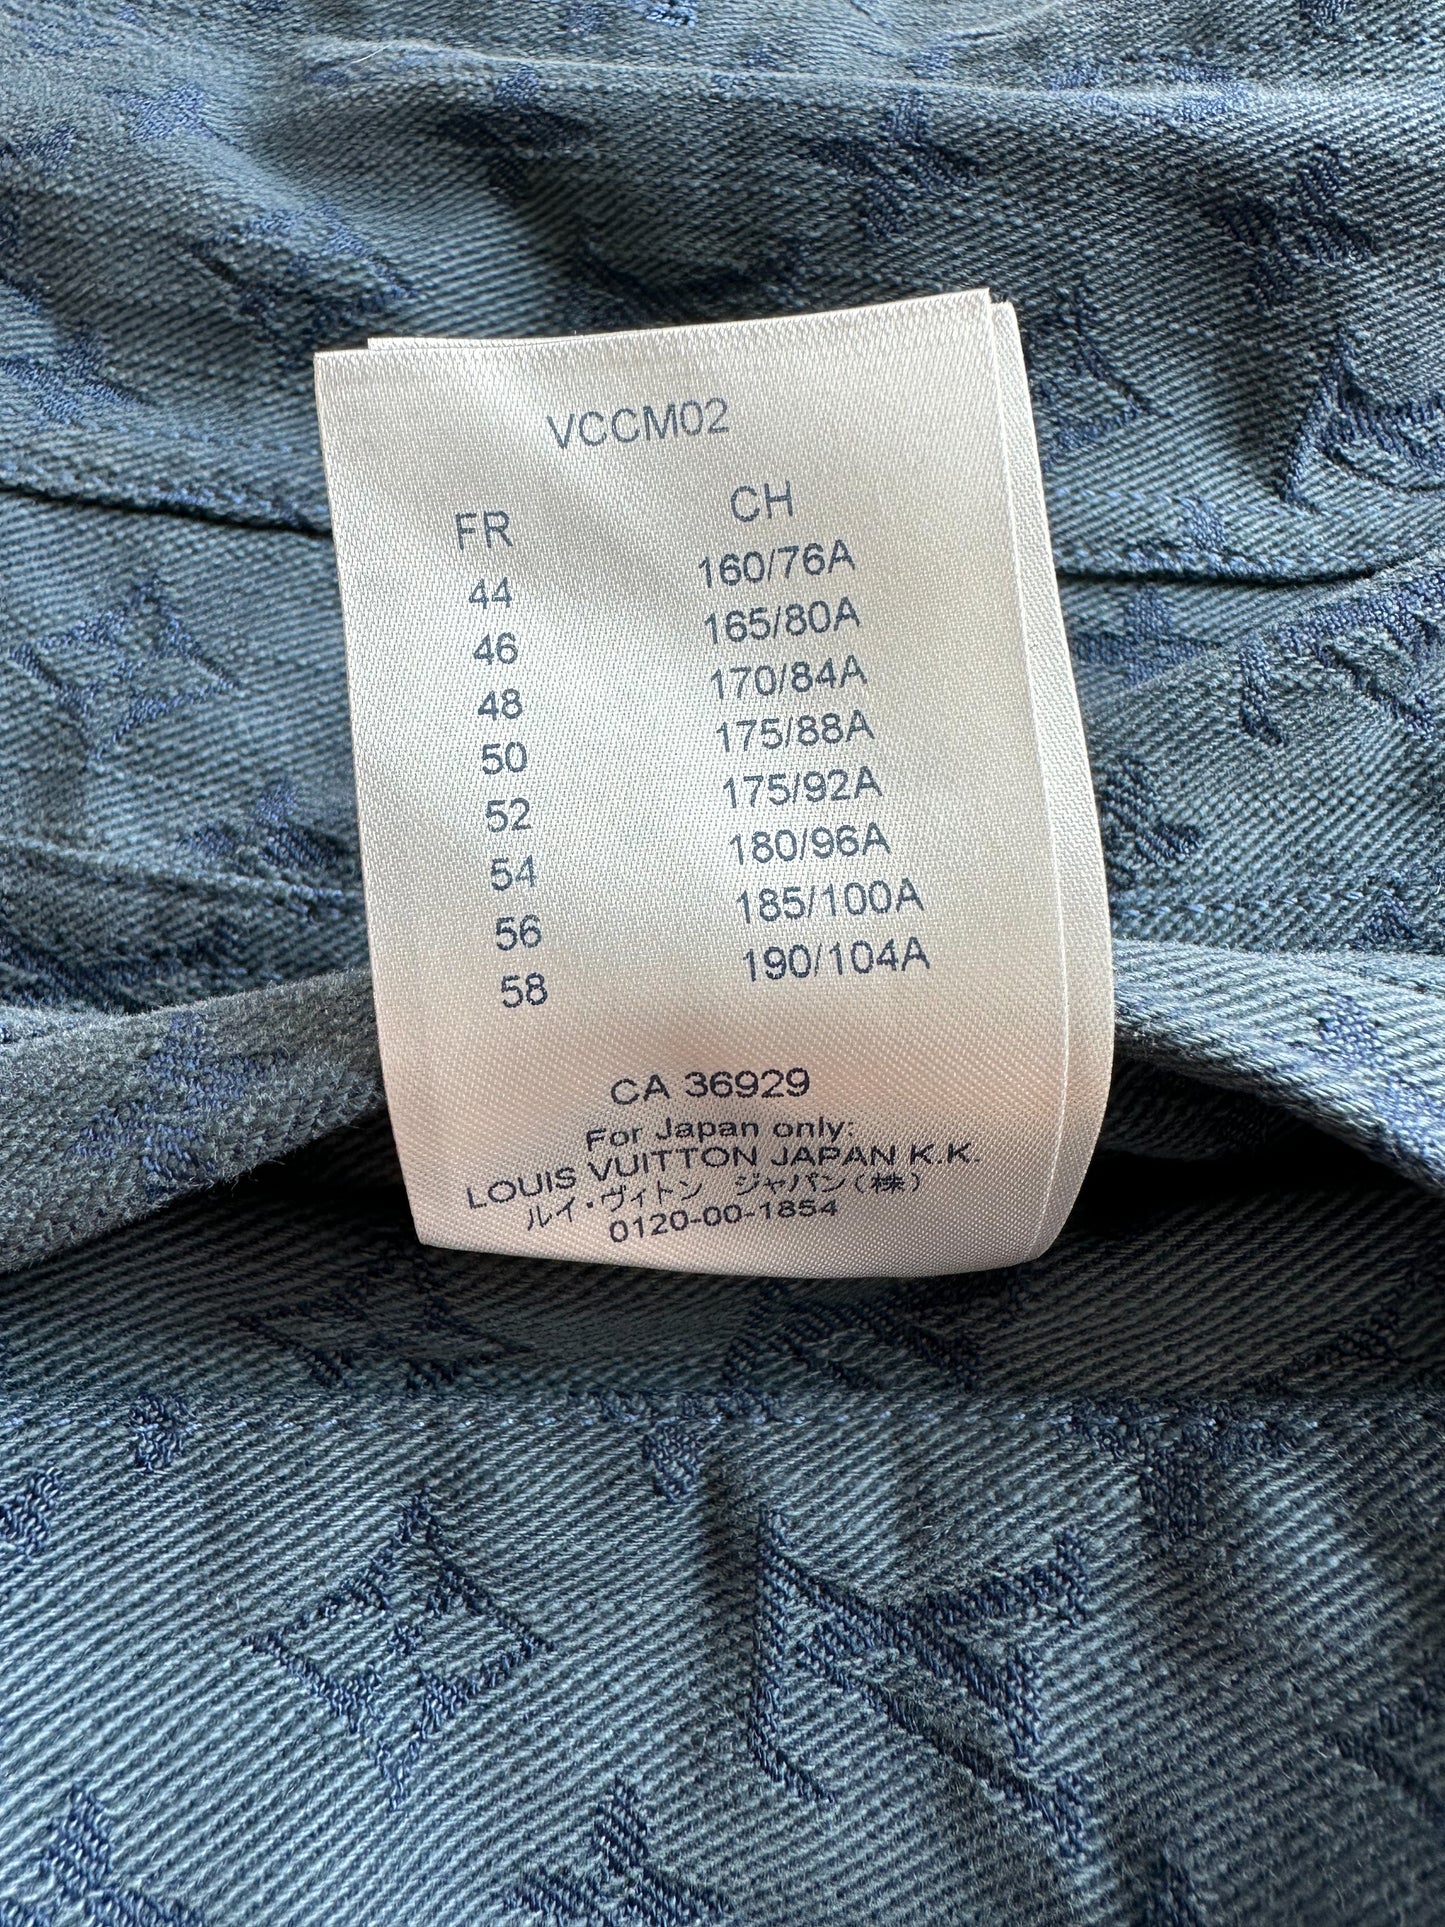 Louis Vuitton Monogram Padded Denim Jacket 1AATPN 1AATPO, Blue, 46